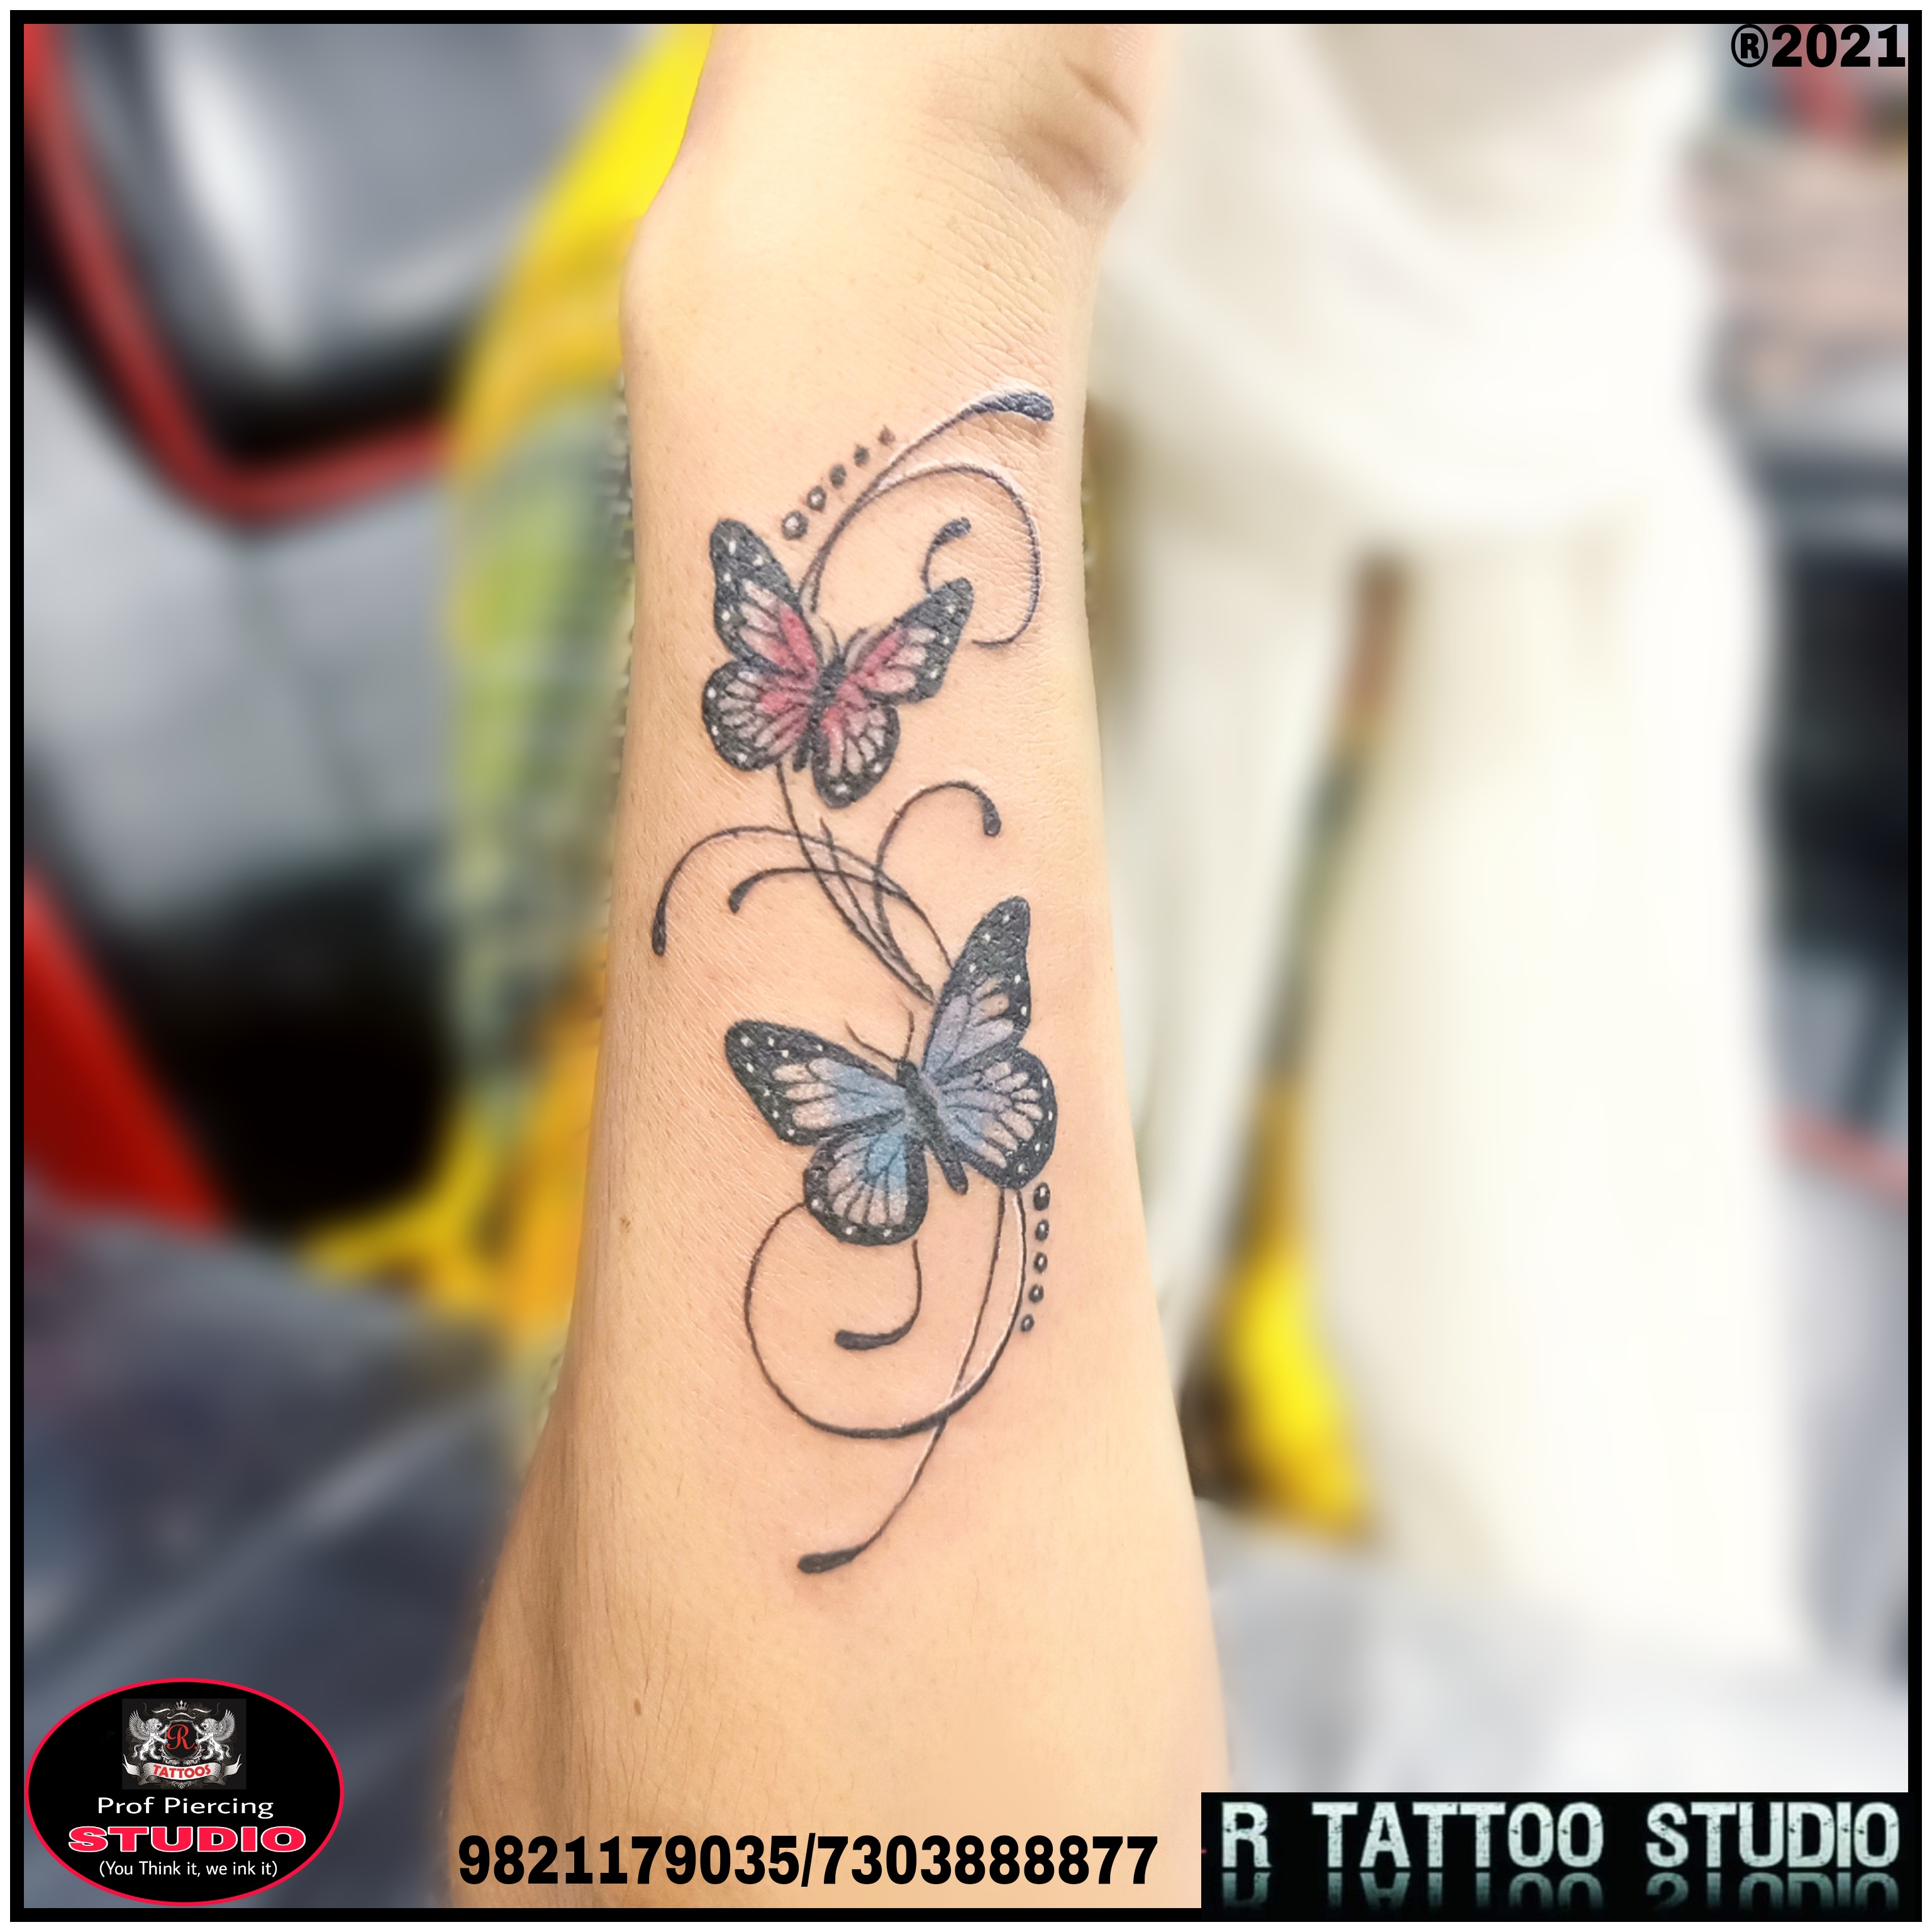 R. Tattoos Studio in Ghatkopar West, Mumbai-400086 | Sulekha Mumbai